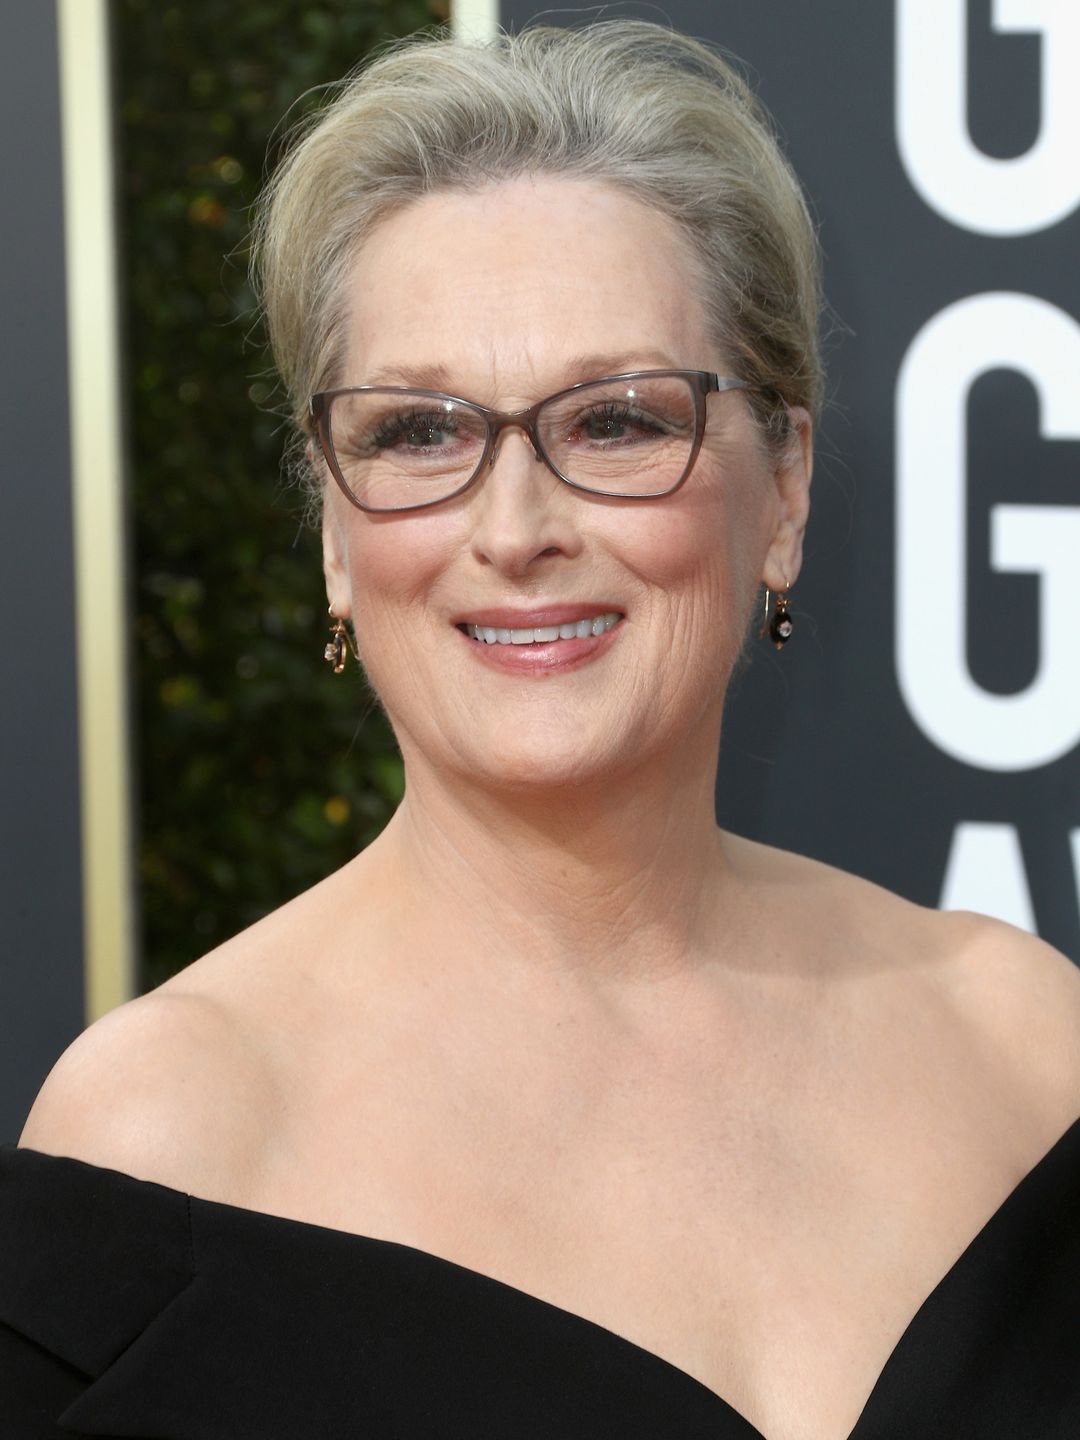 Meryl Streep personal traits